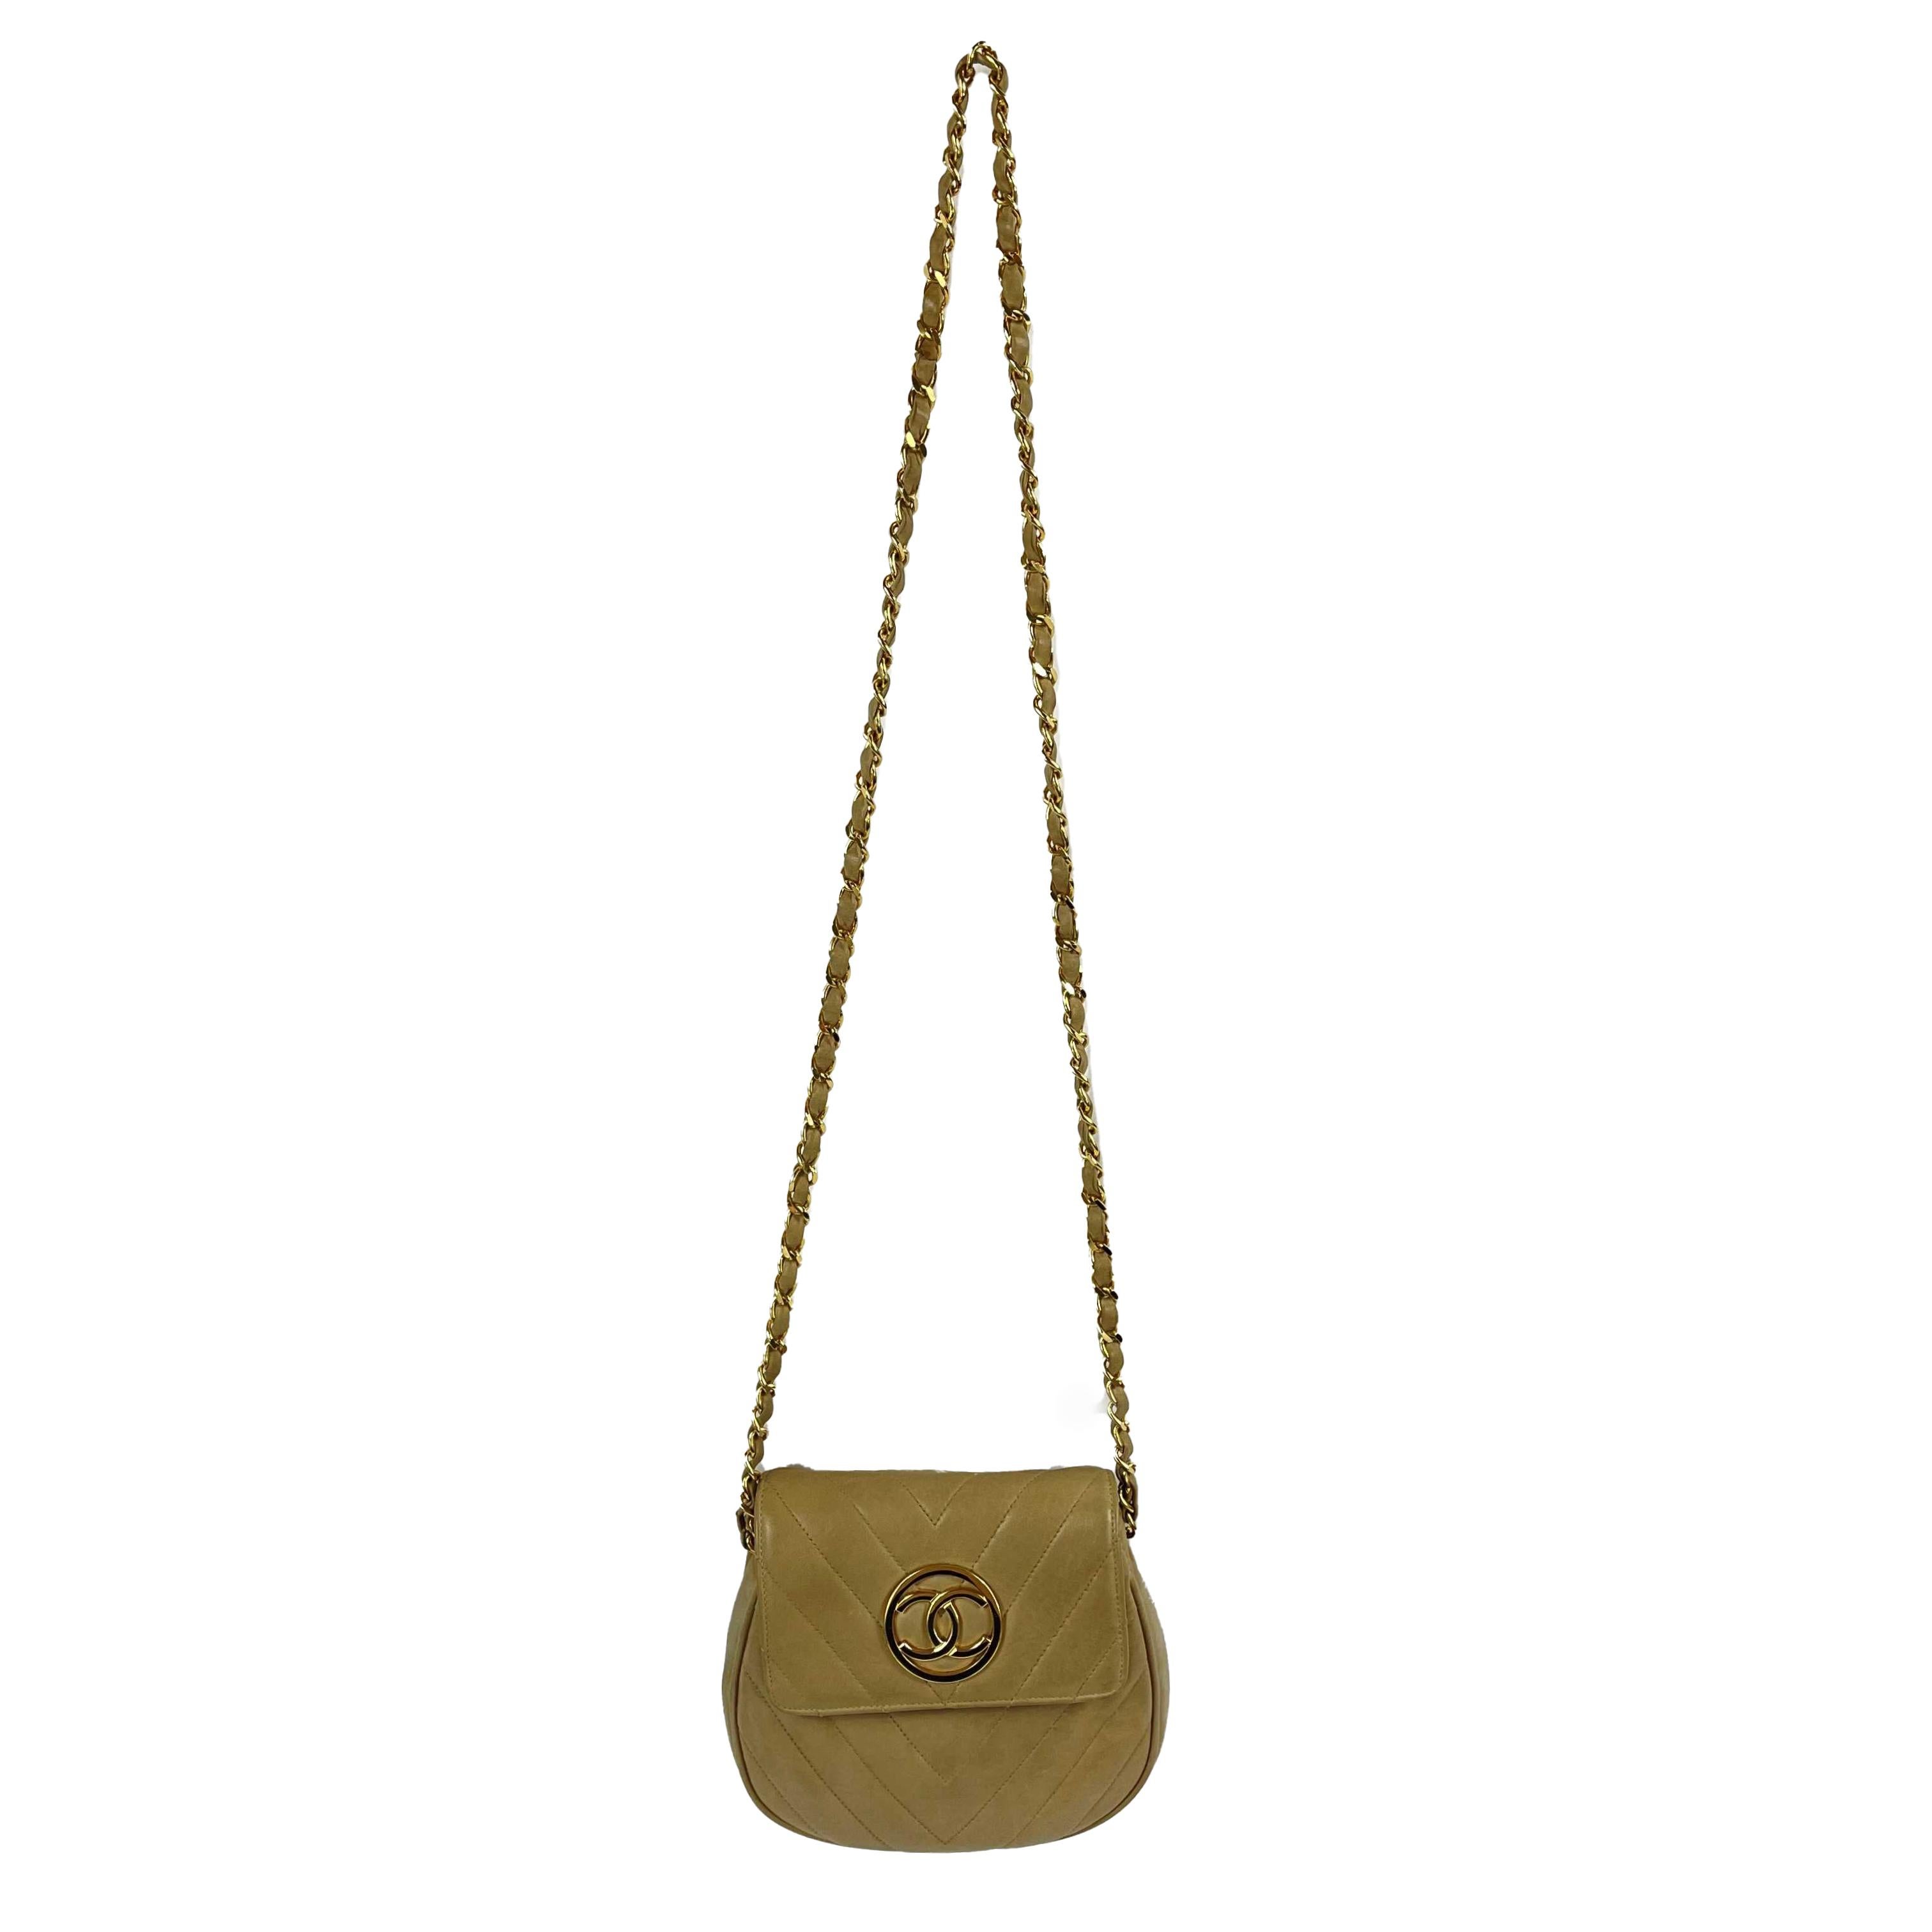 Chanel - Excellent - 90's Vintage Chevron Flap 24k - Beige, Gold - Handbag 3